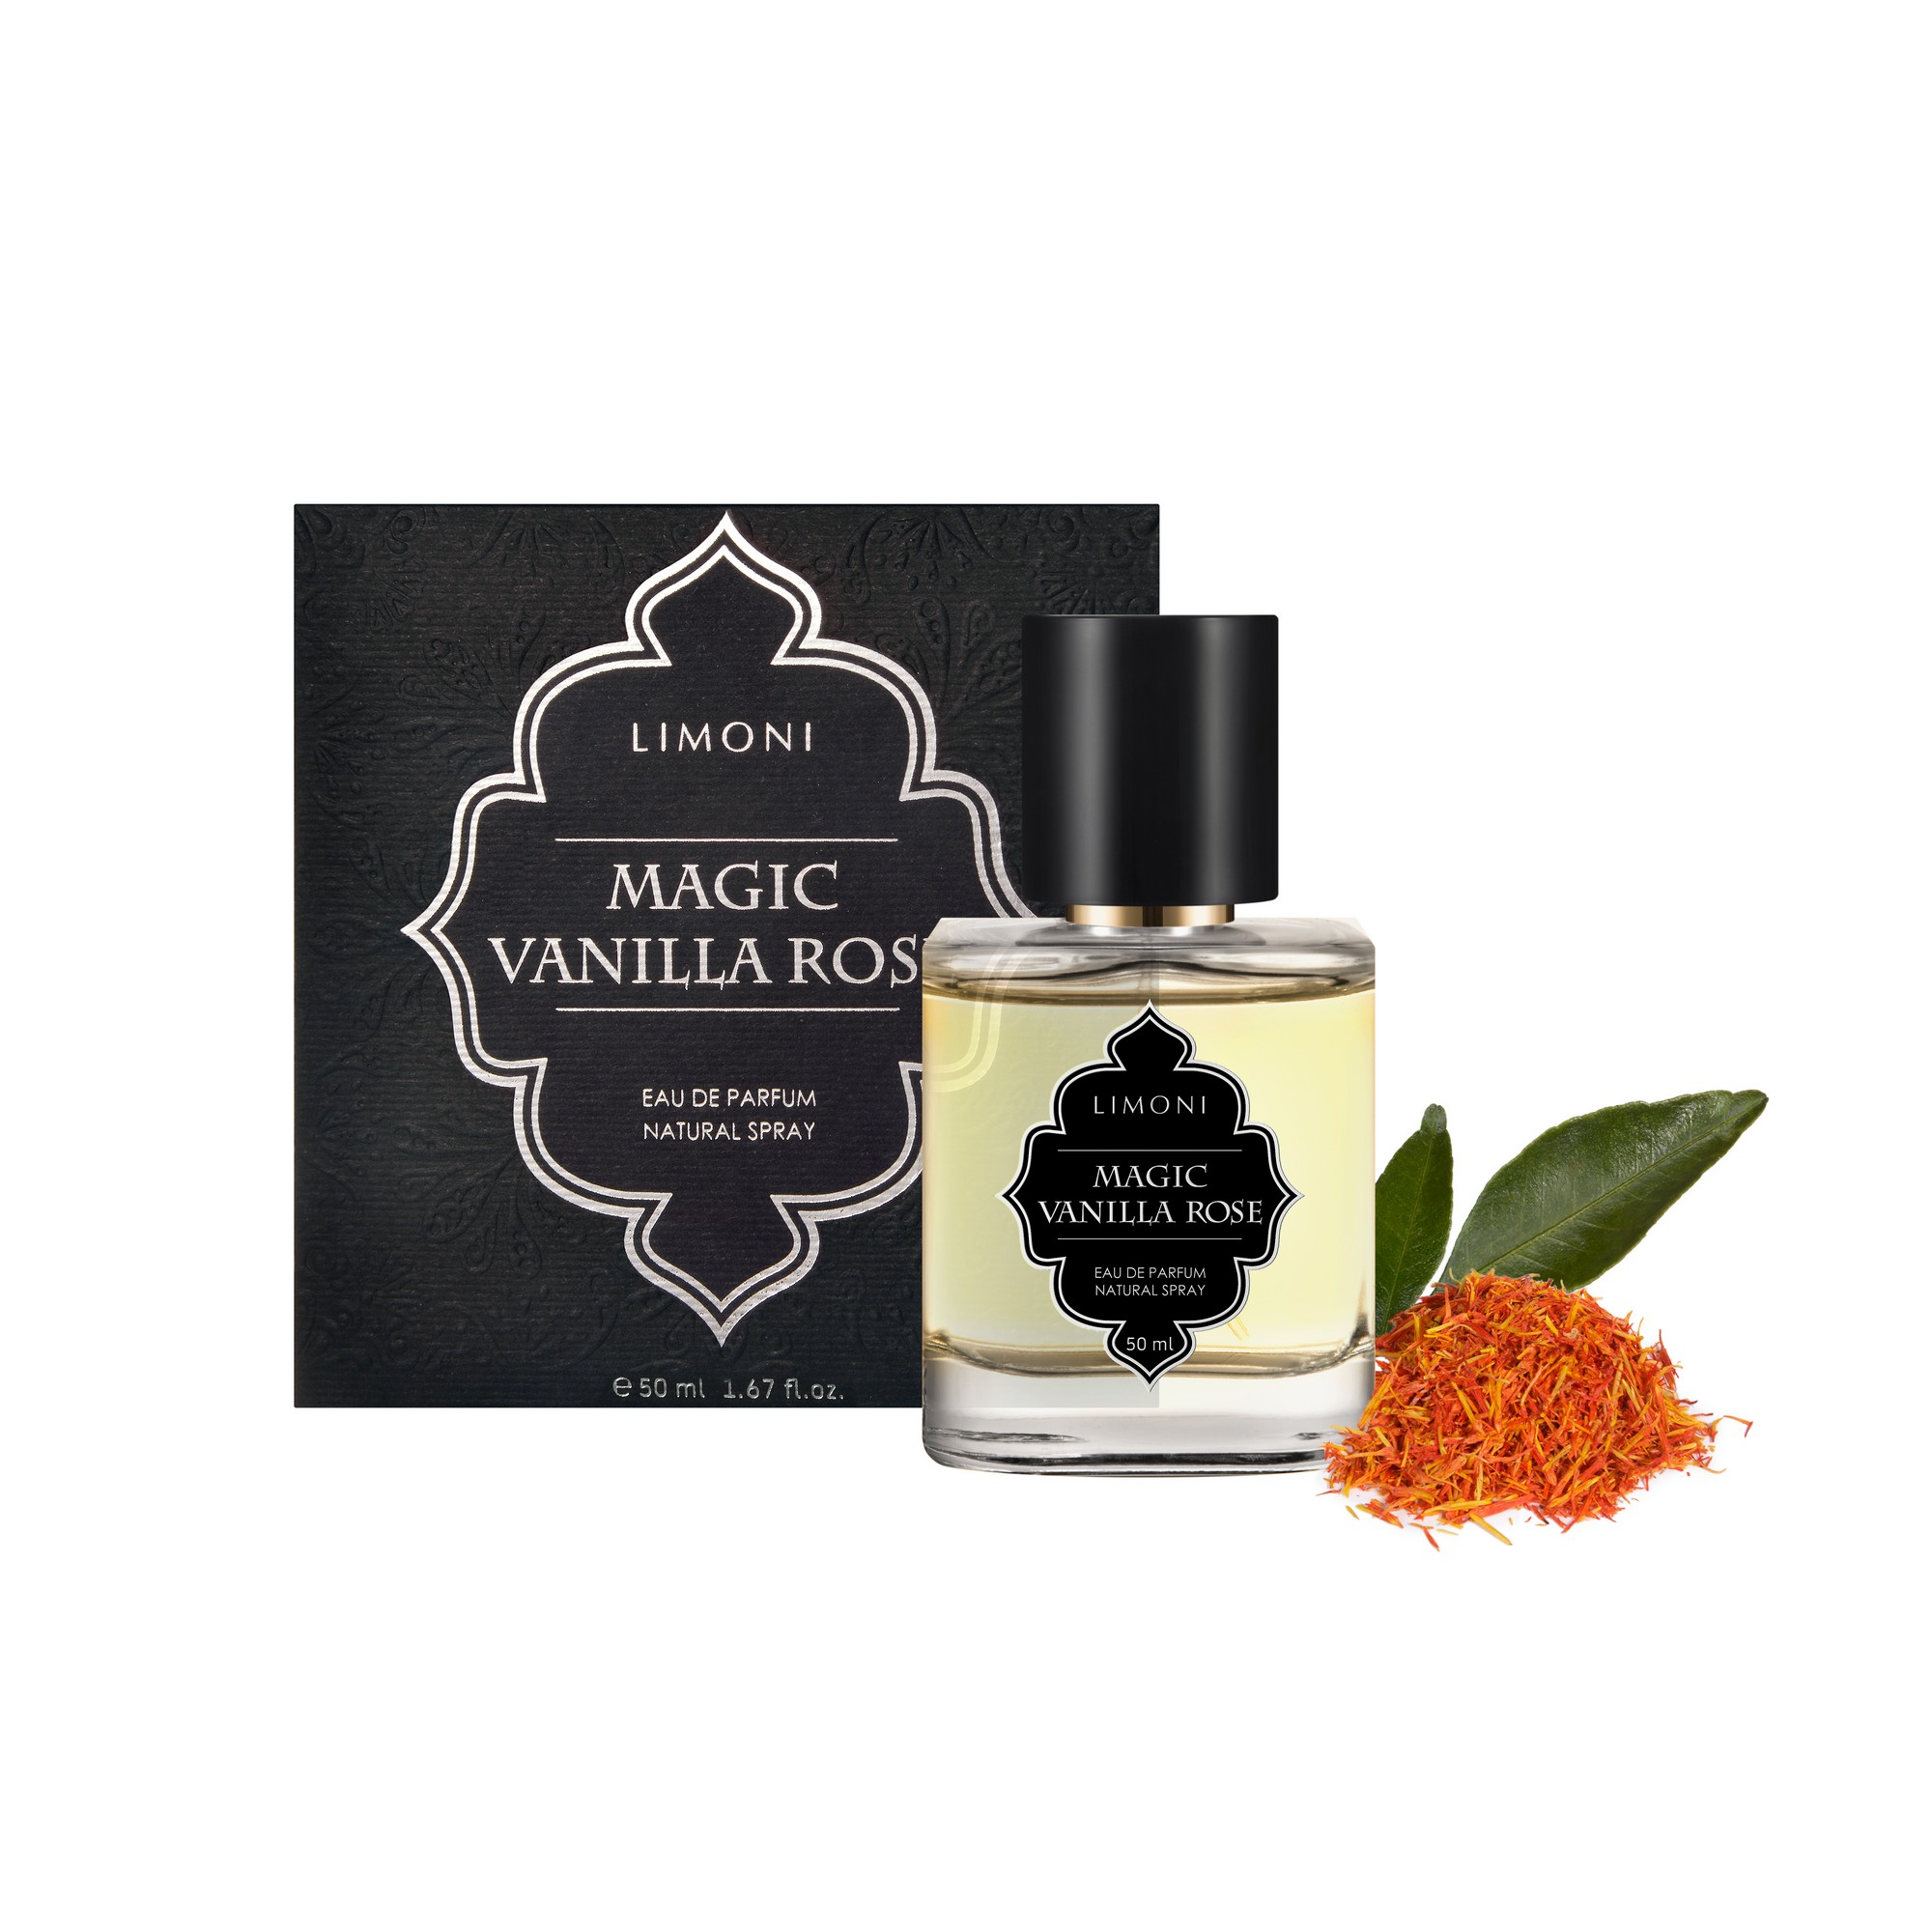 LIMONI Вода парфюмерная / Magic Vanilla Rose Eau de Parfum 5